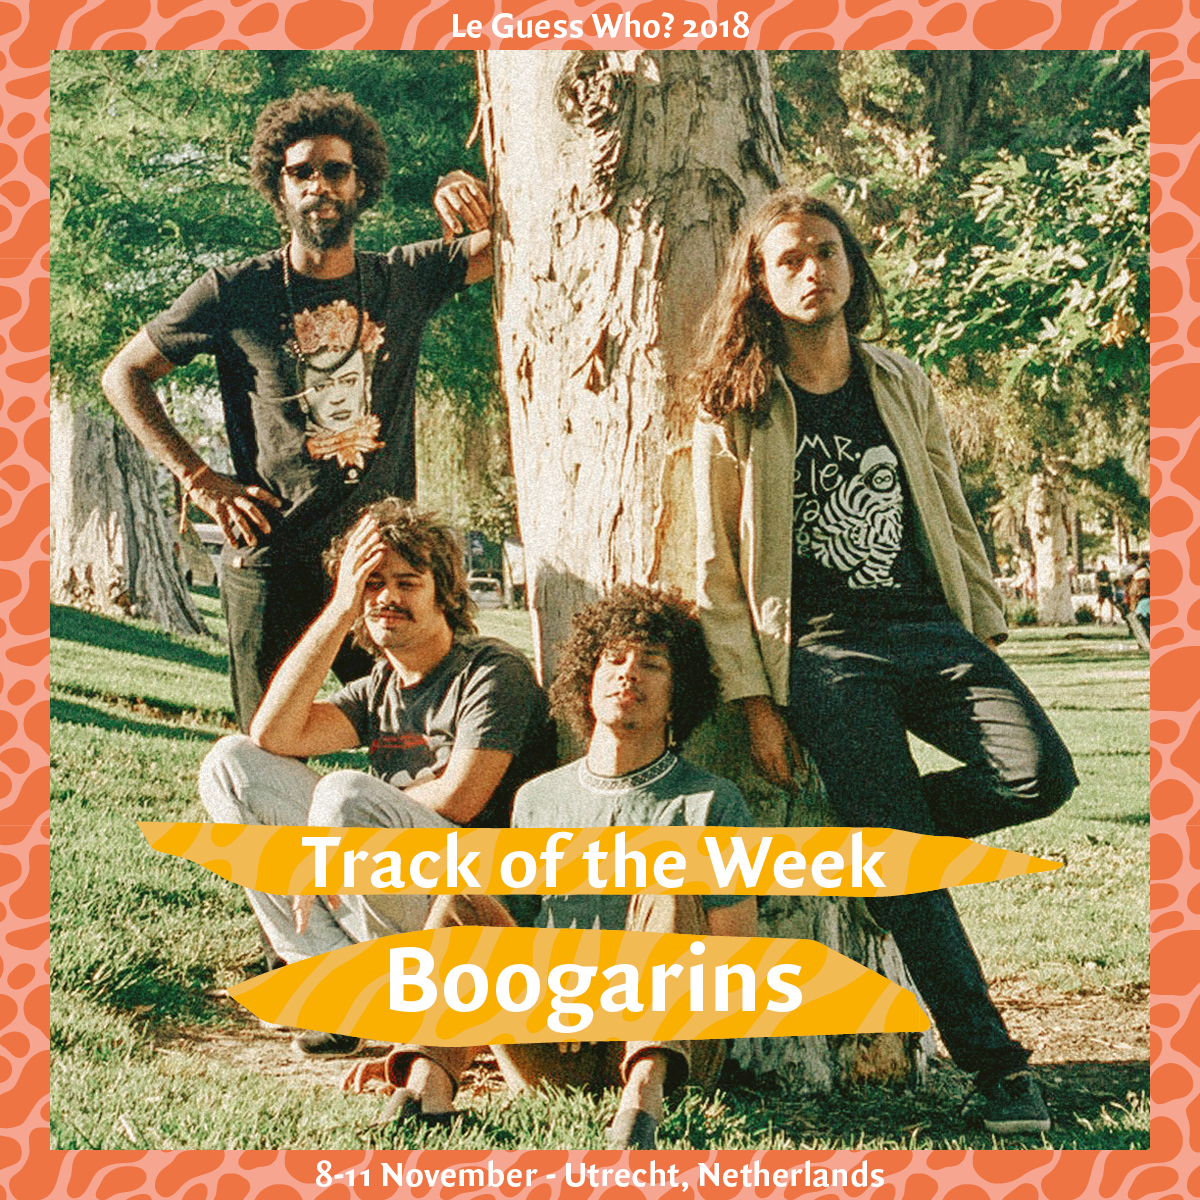  Track of the Week #18: Boogarins - 'Foimal'